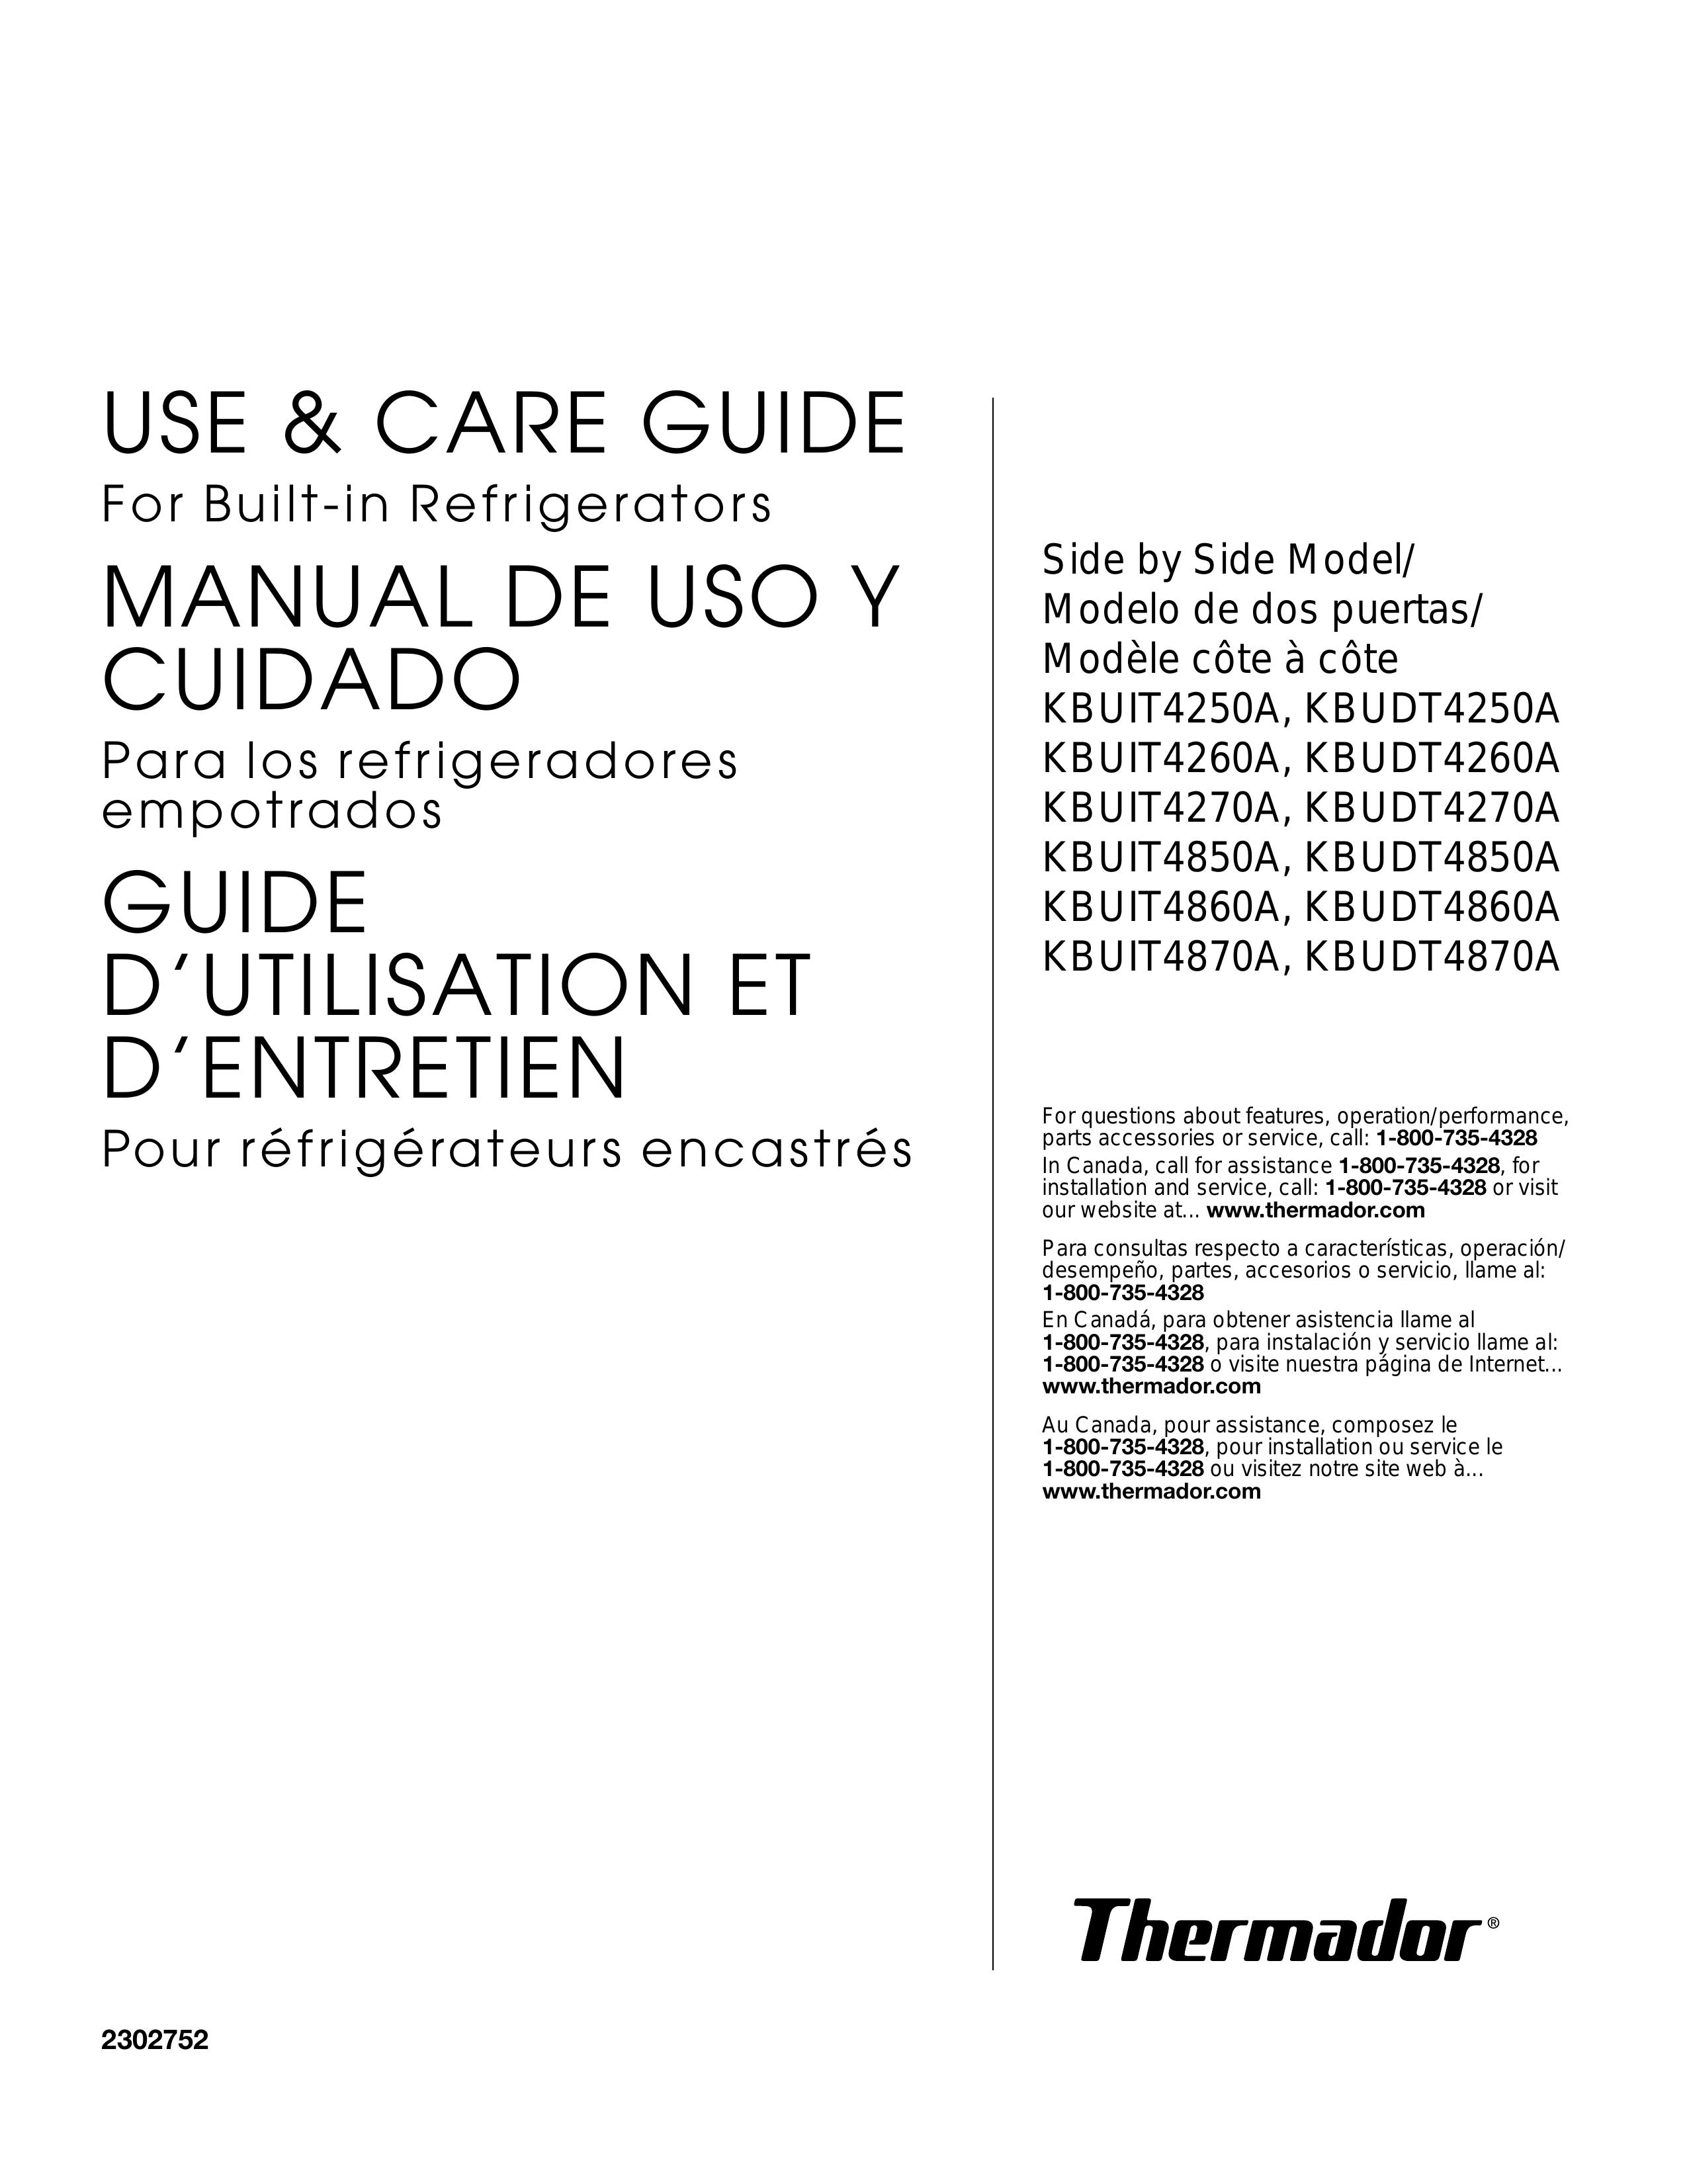 Thermador KBUDT4850A Refrigerator User Manual